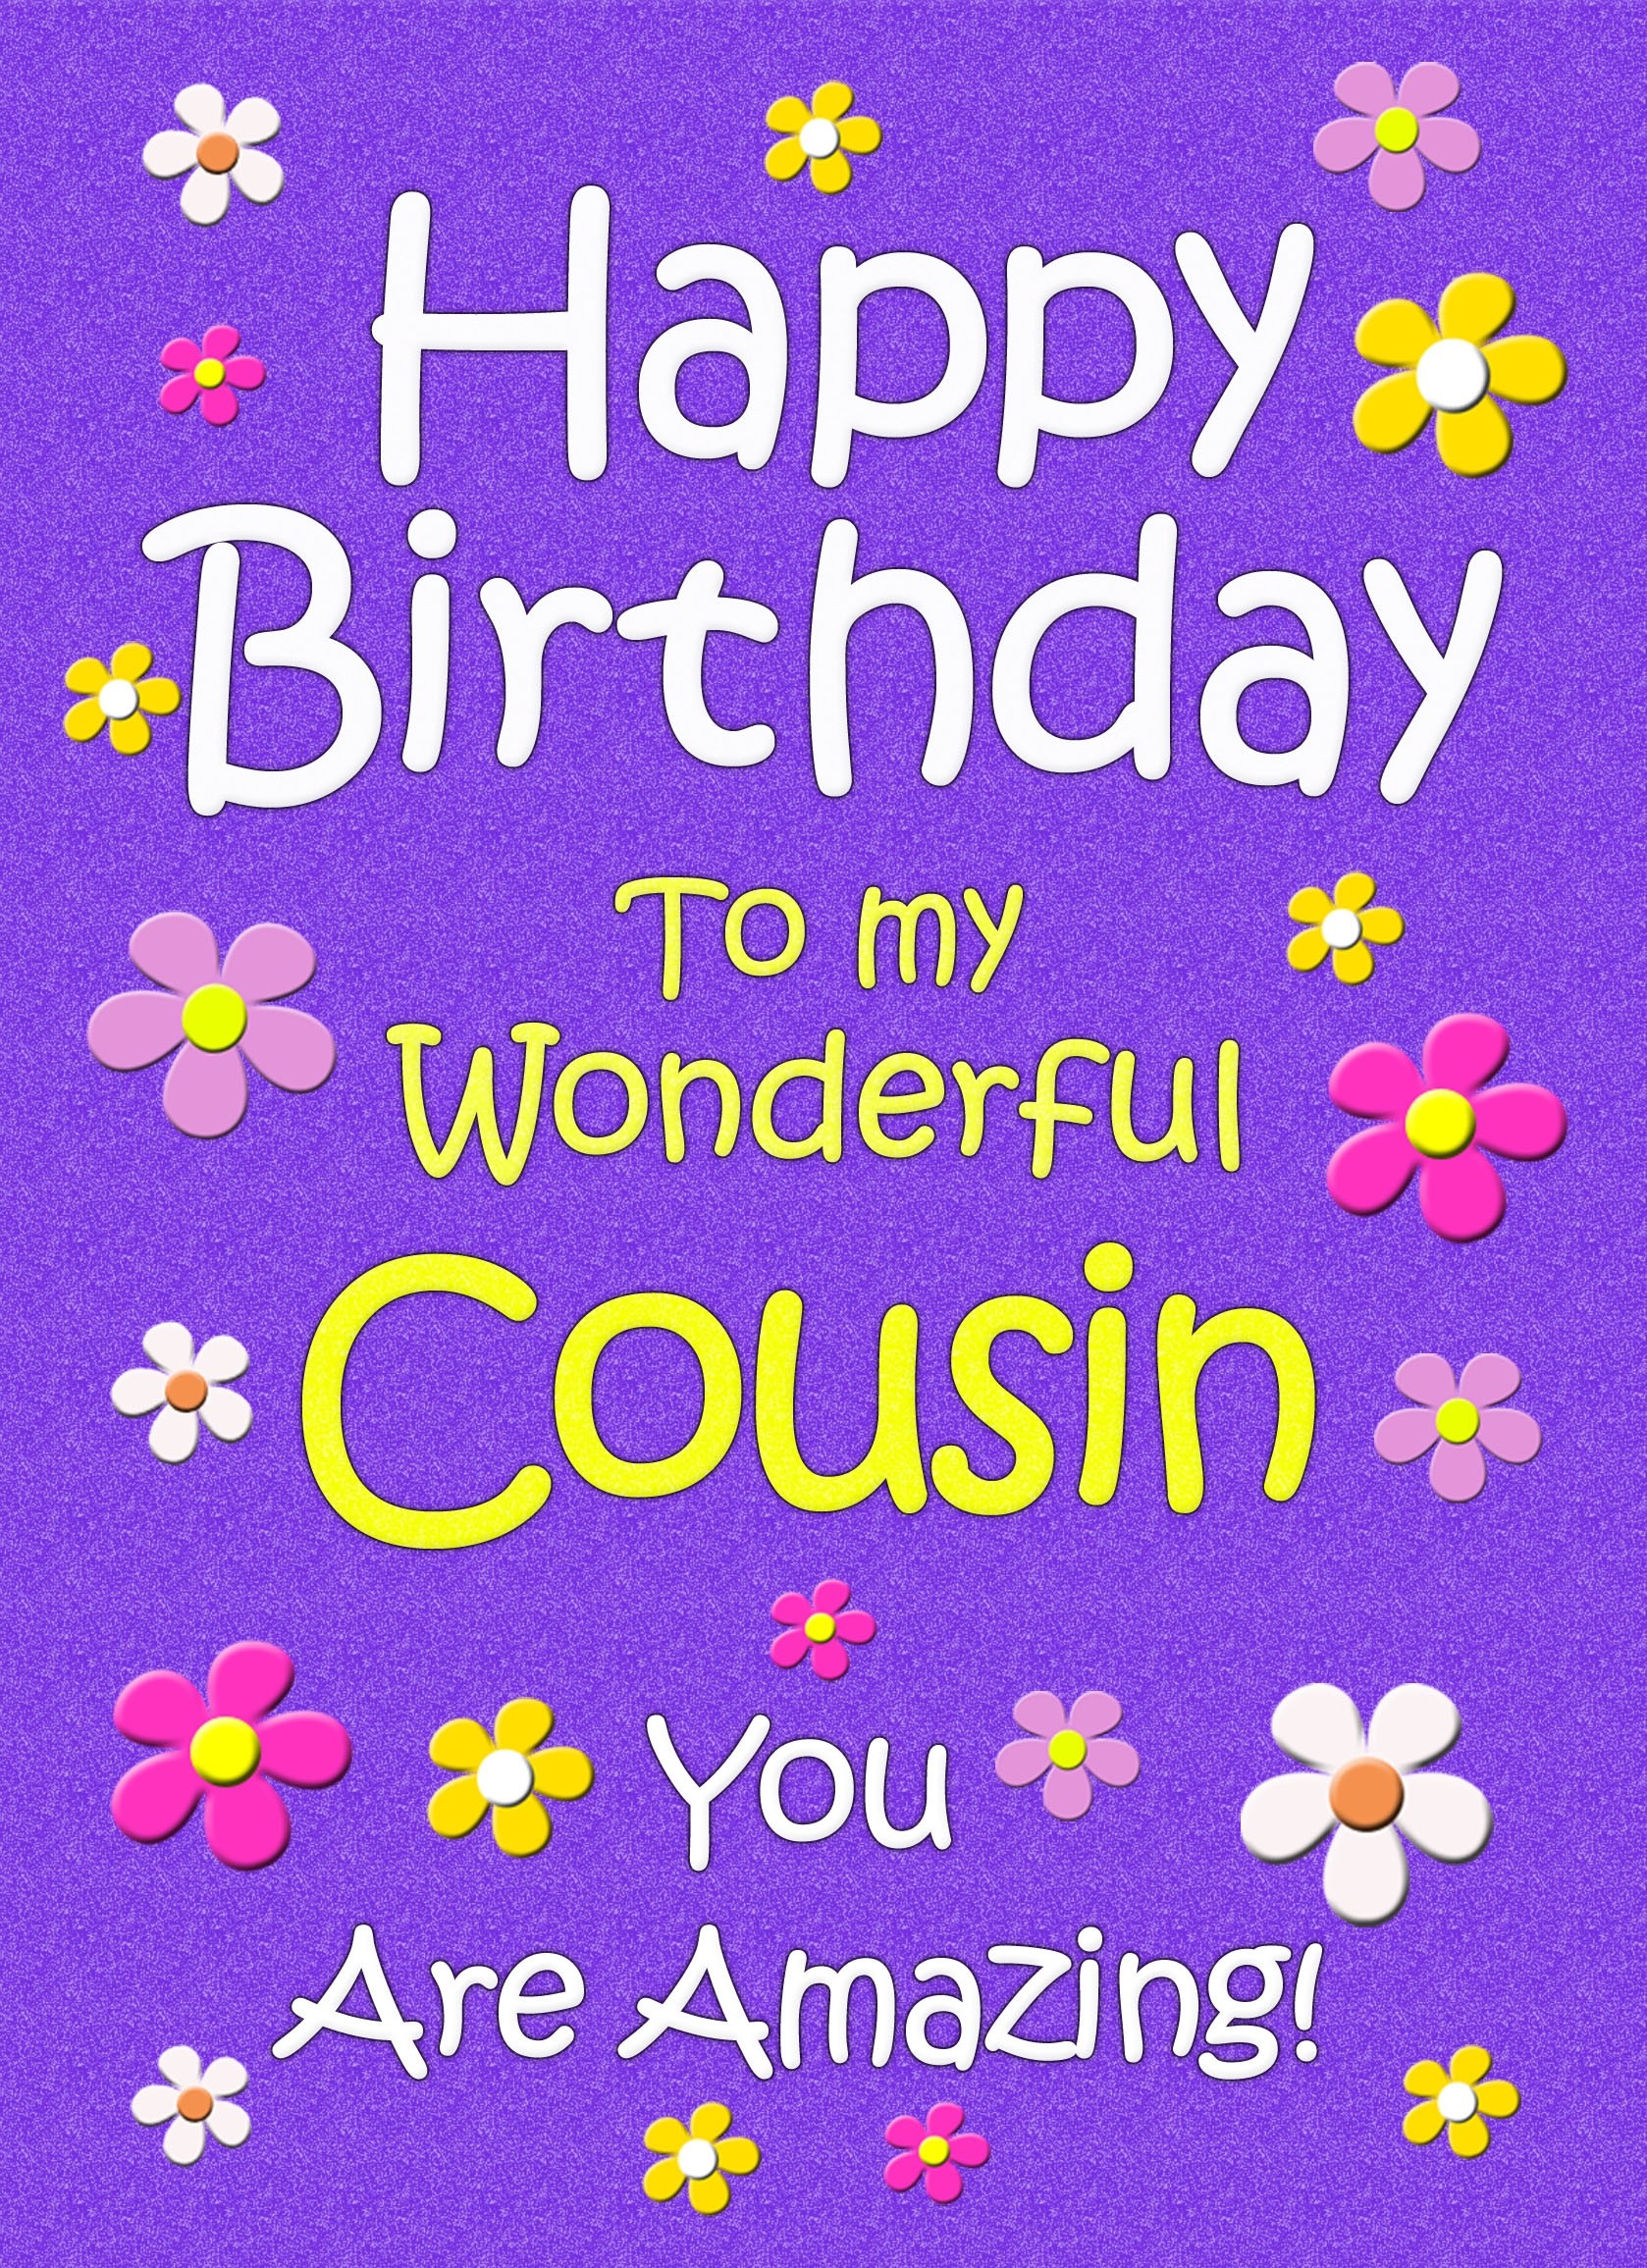 Personalised Cousin Birthday Card (Purple)